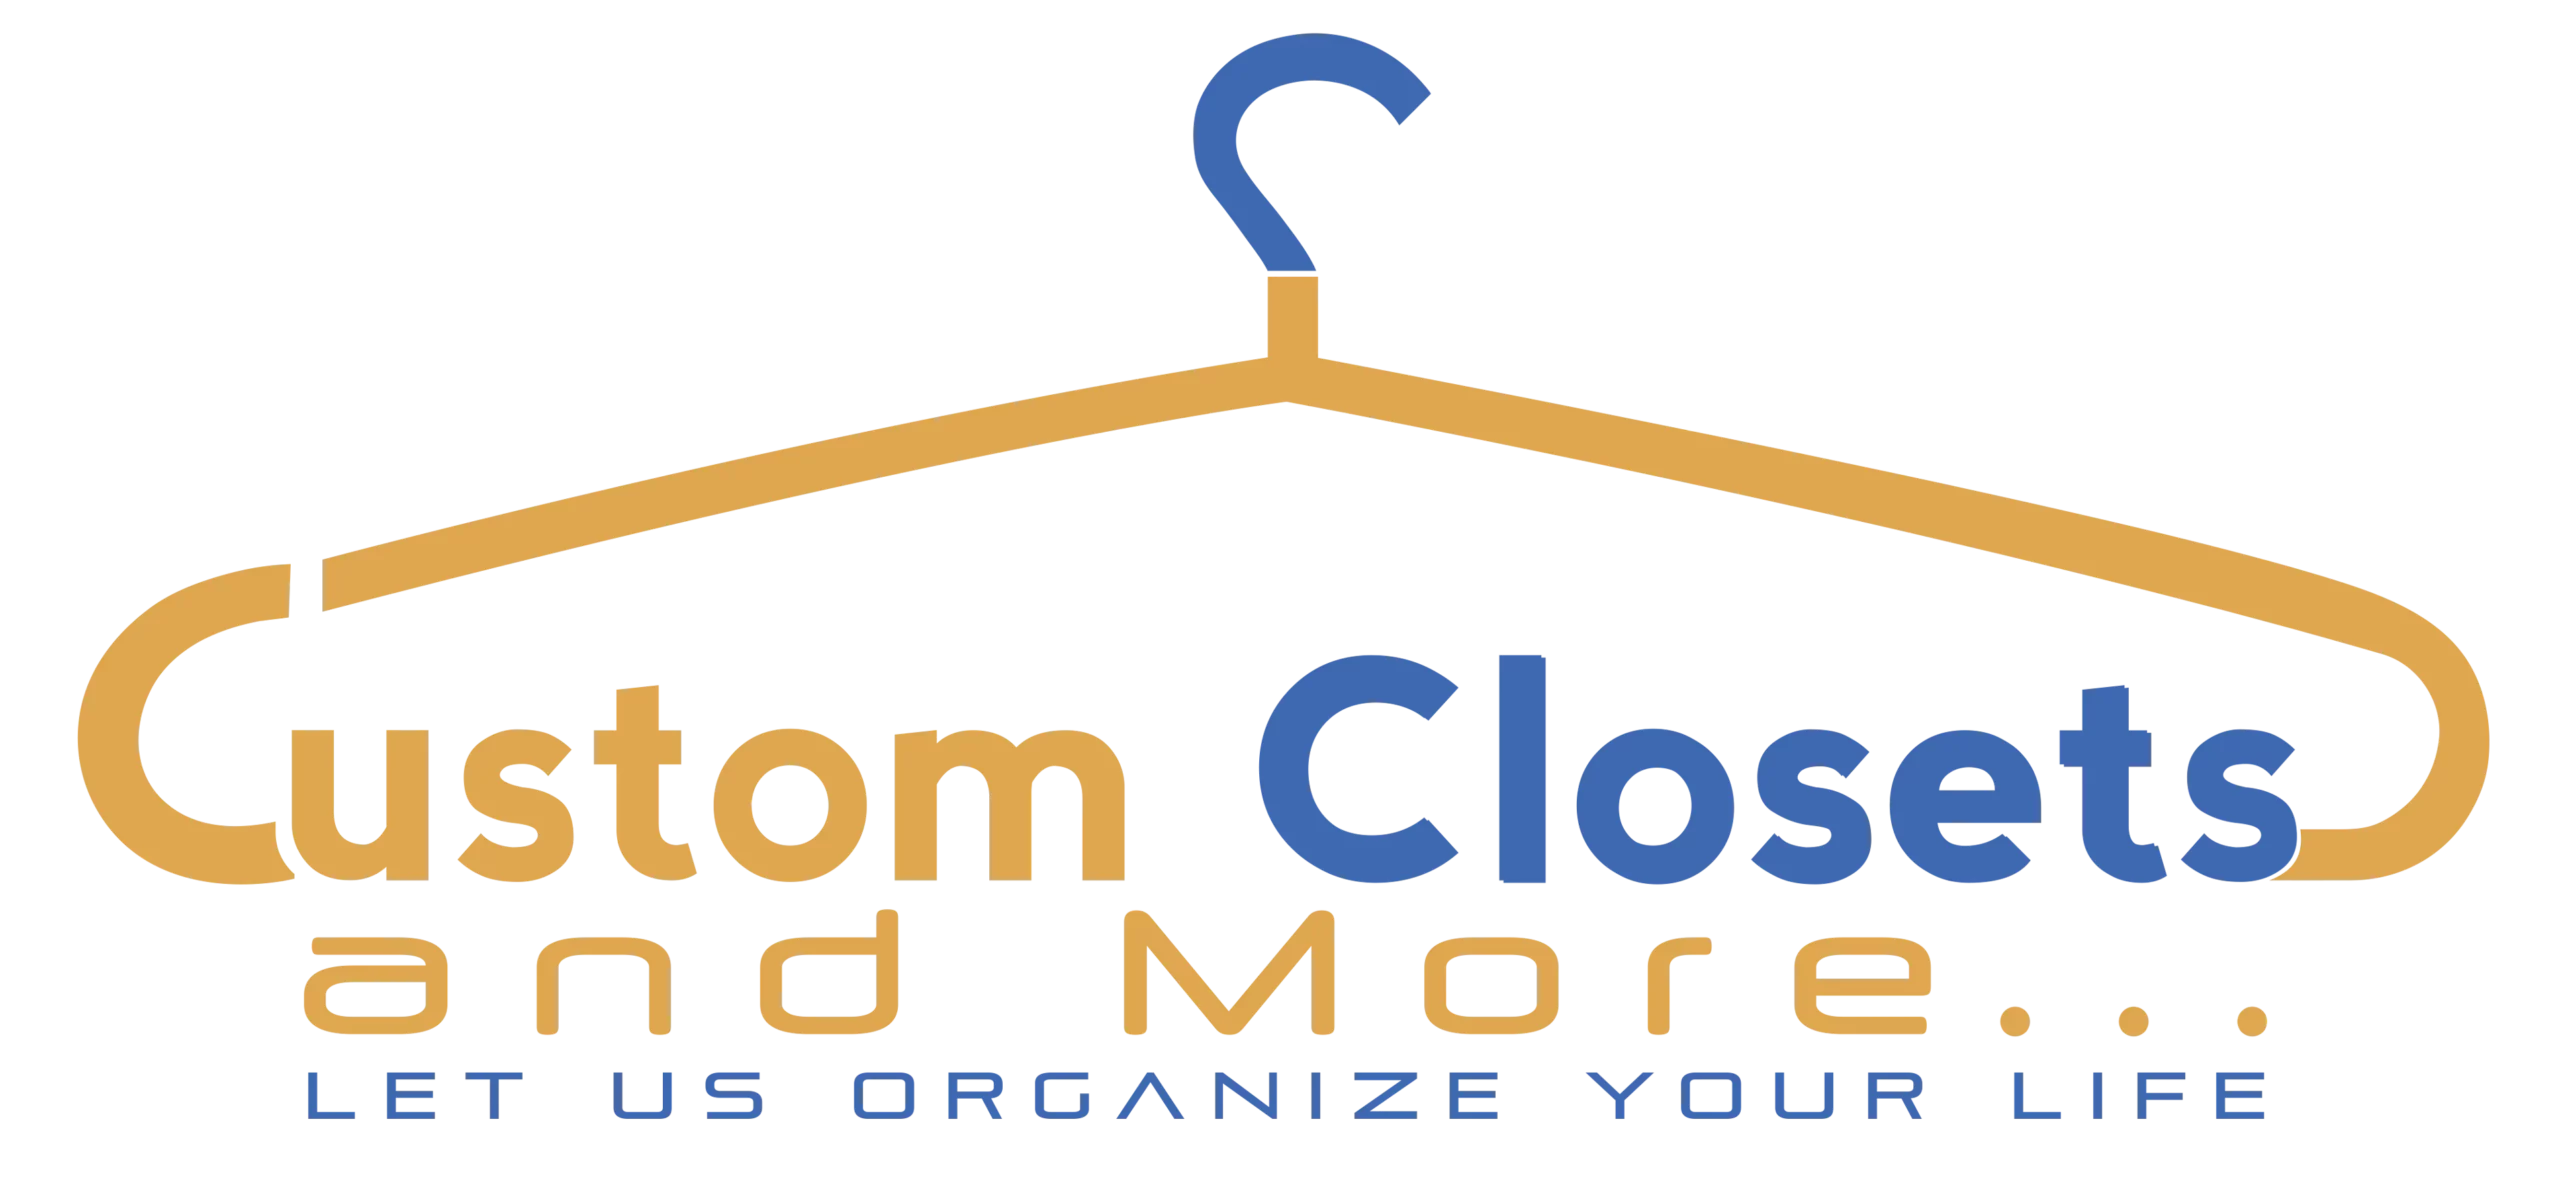 Custom Closets and More company logo